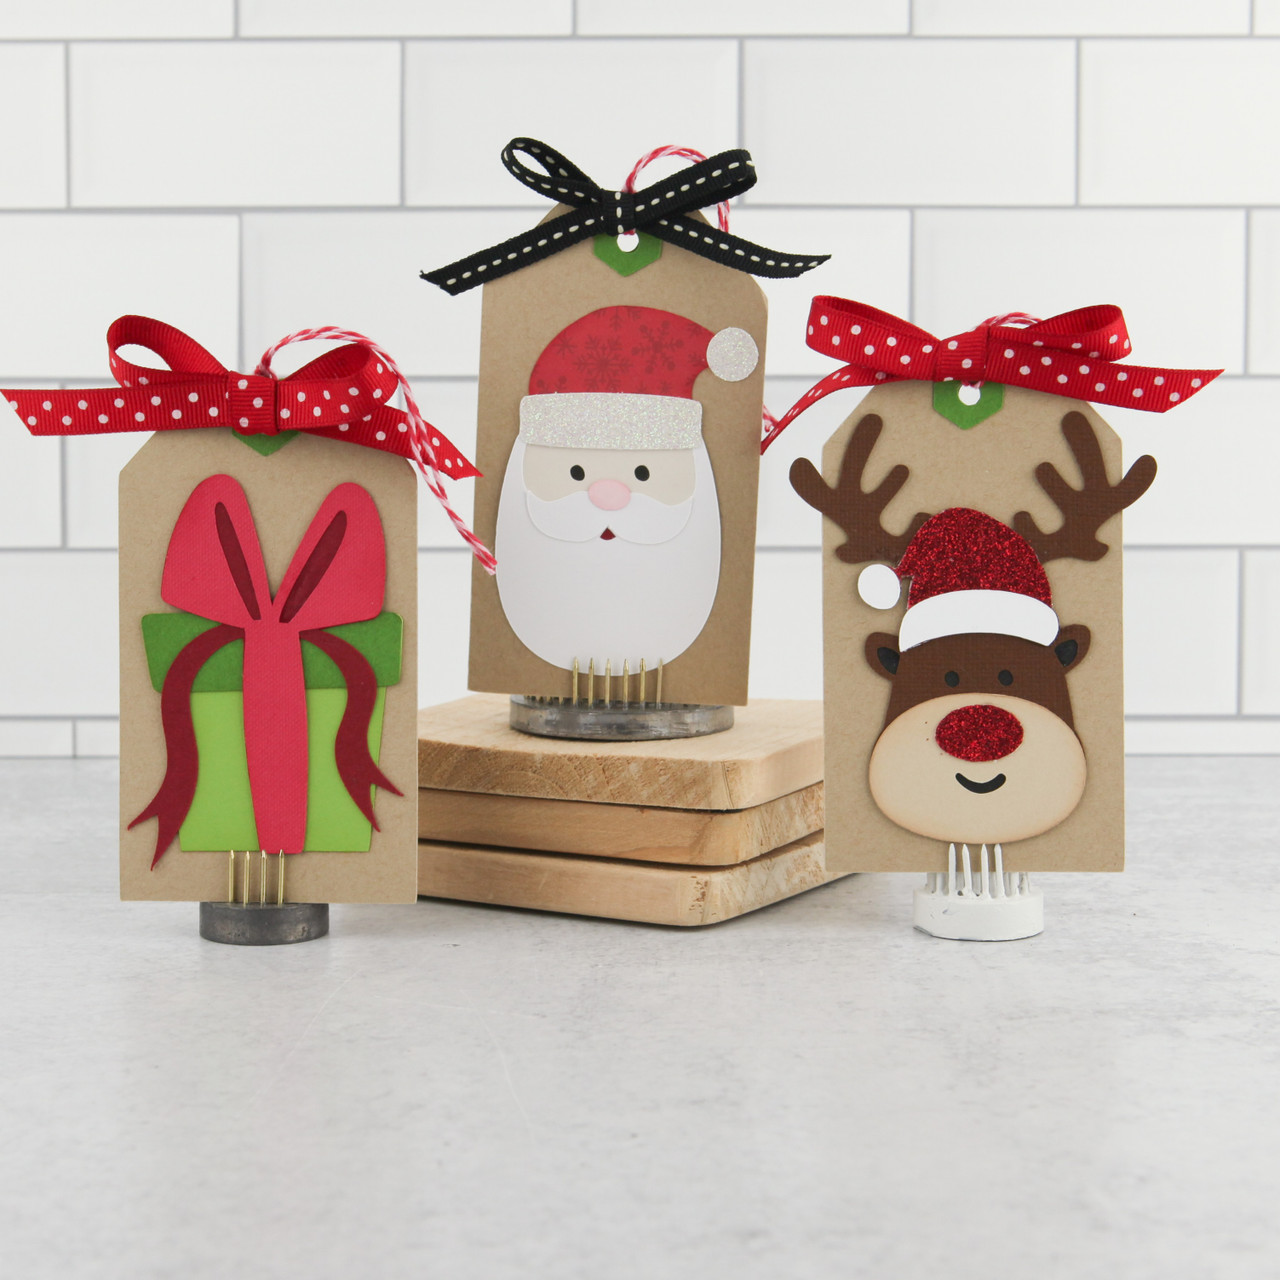 Christmas Gift Card Holder Bundle - Lori Whitlock's SVG Shop